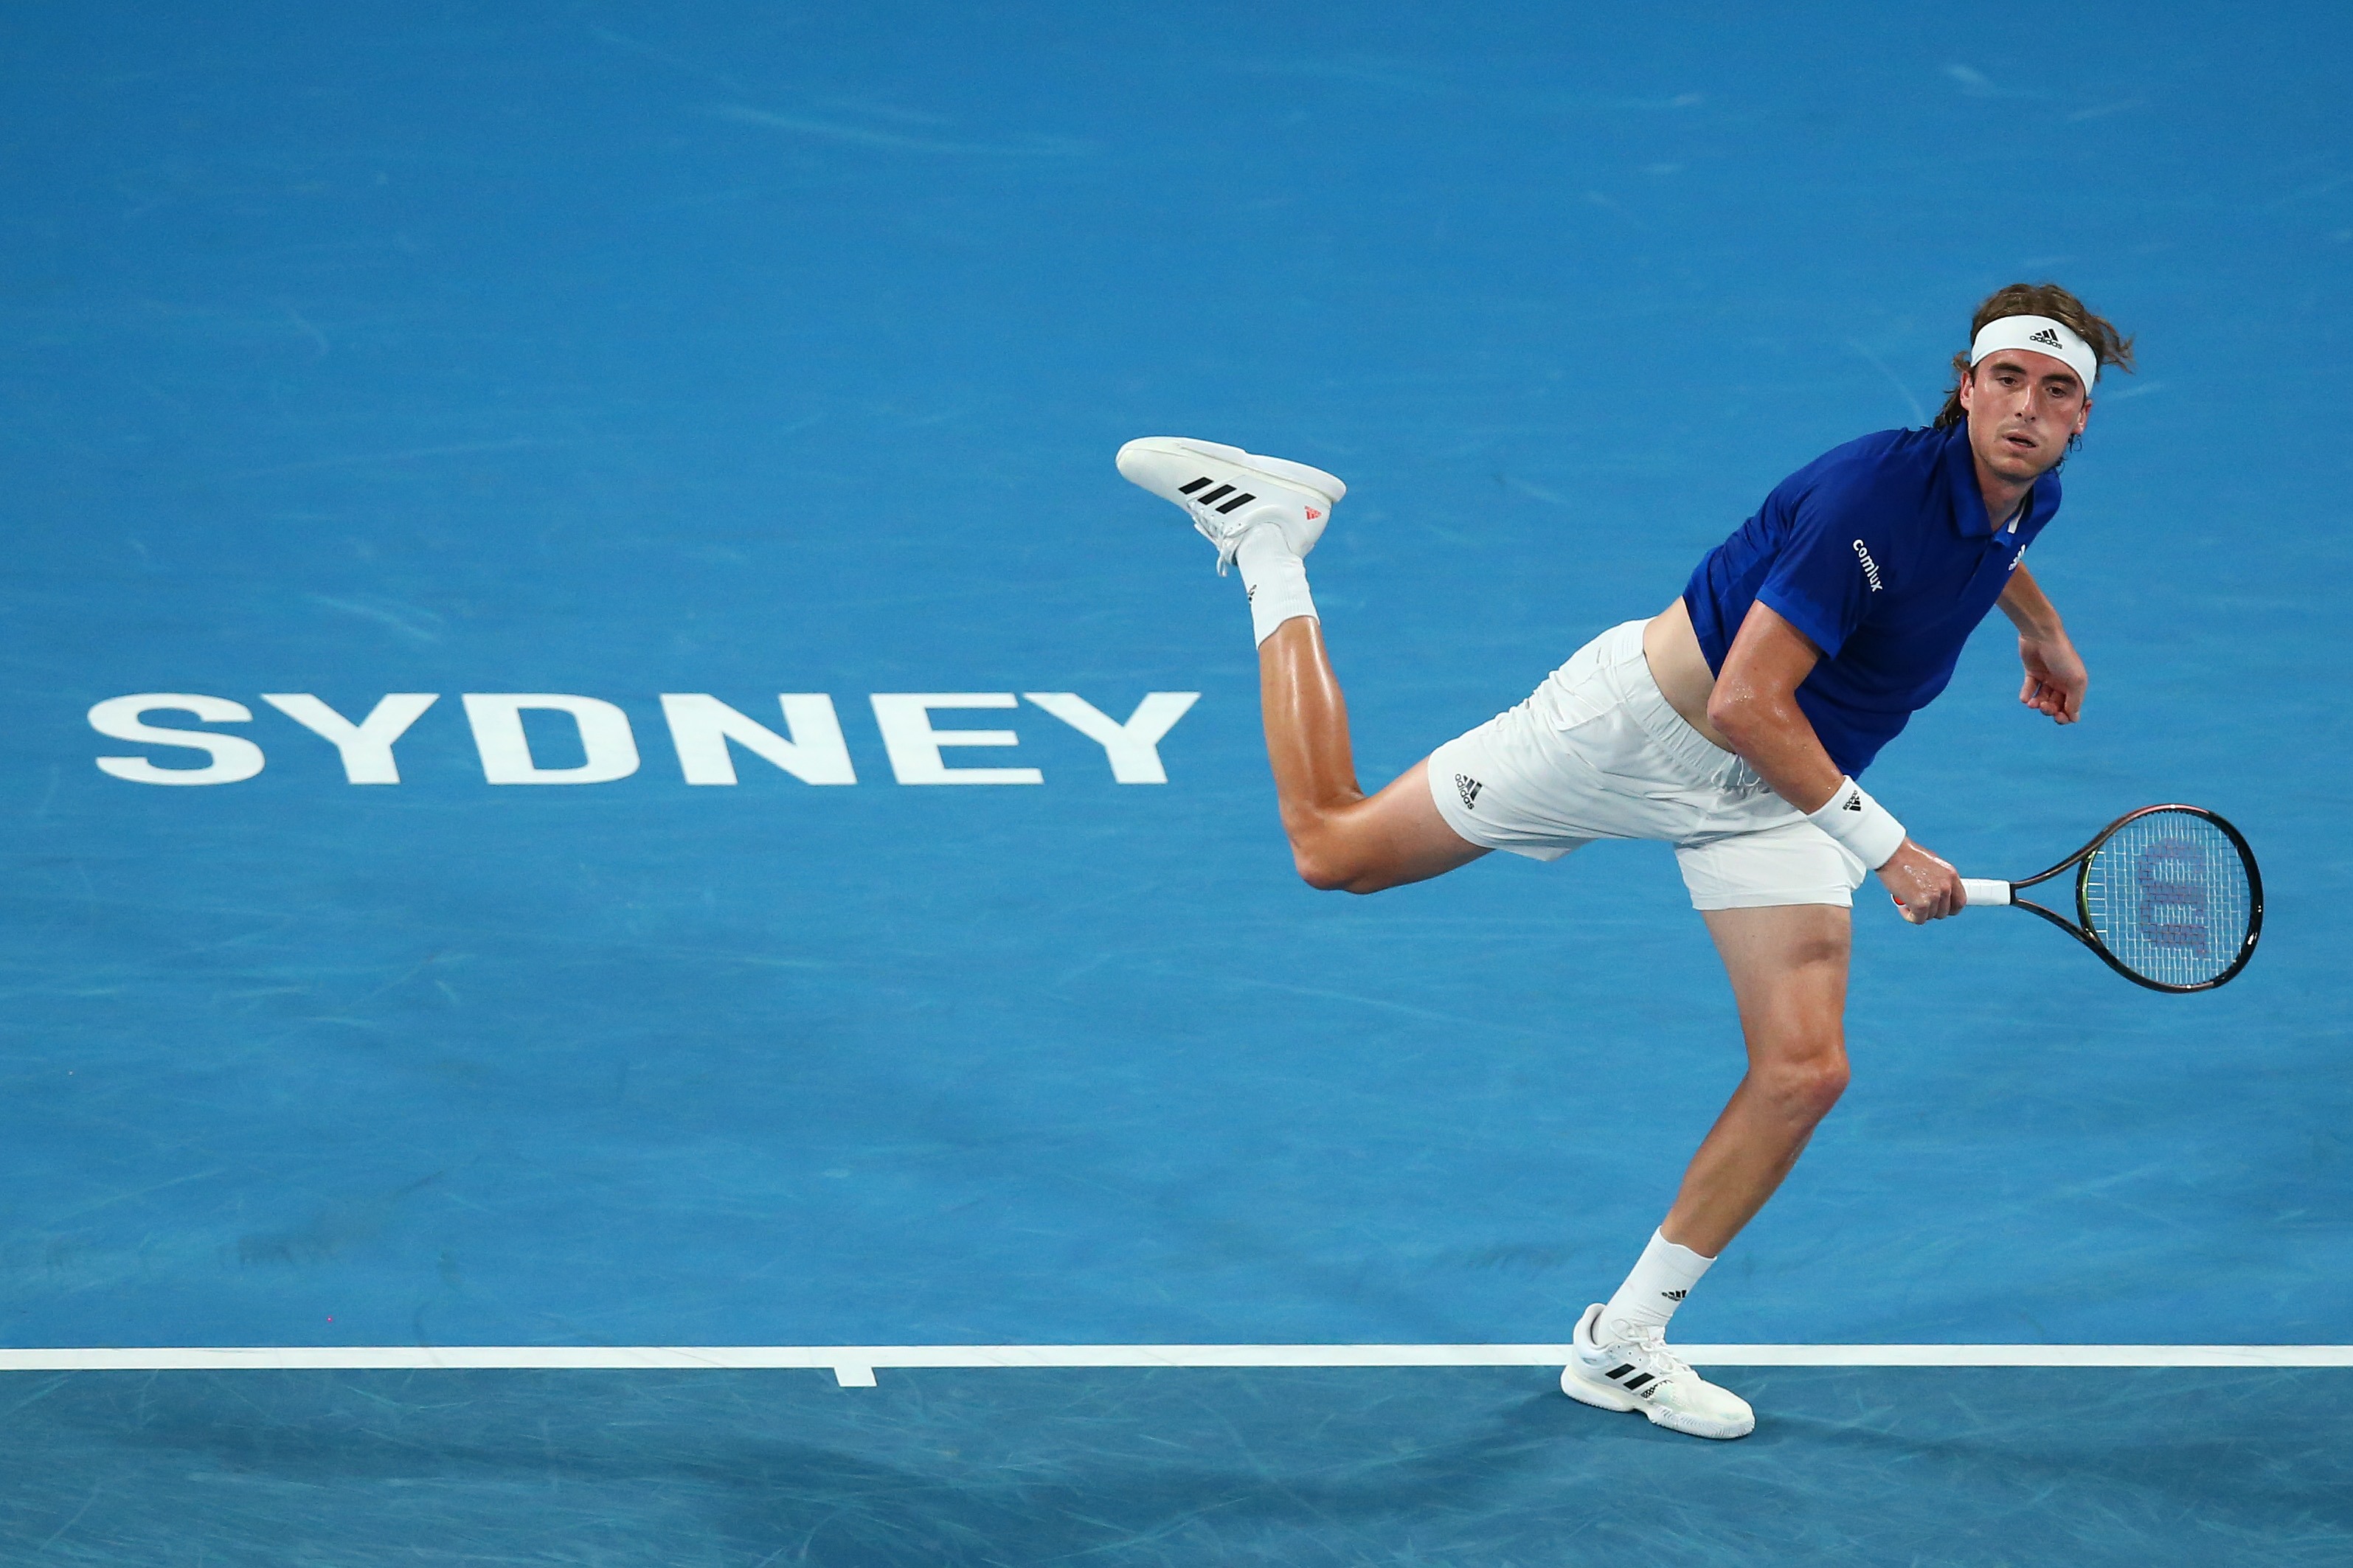 Stefanos Tsitsipas experiencing pain following off-season elbow surgery but still aims to play Australian Open